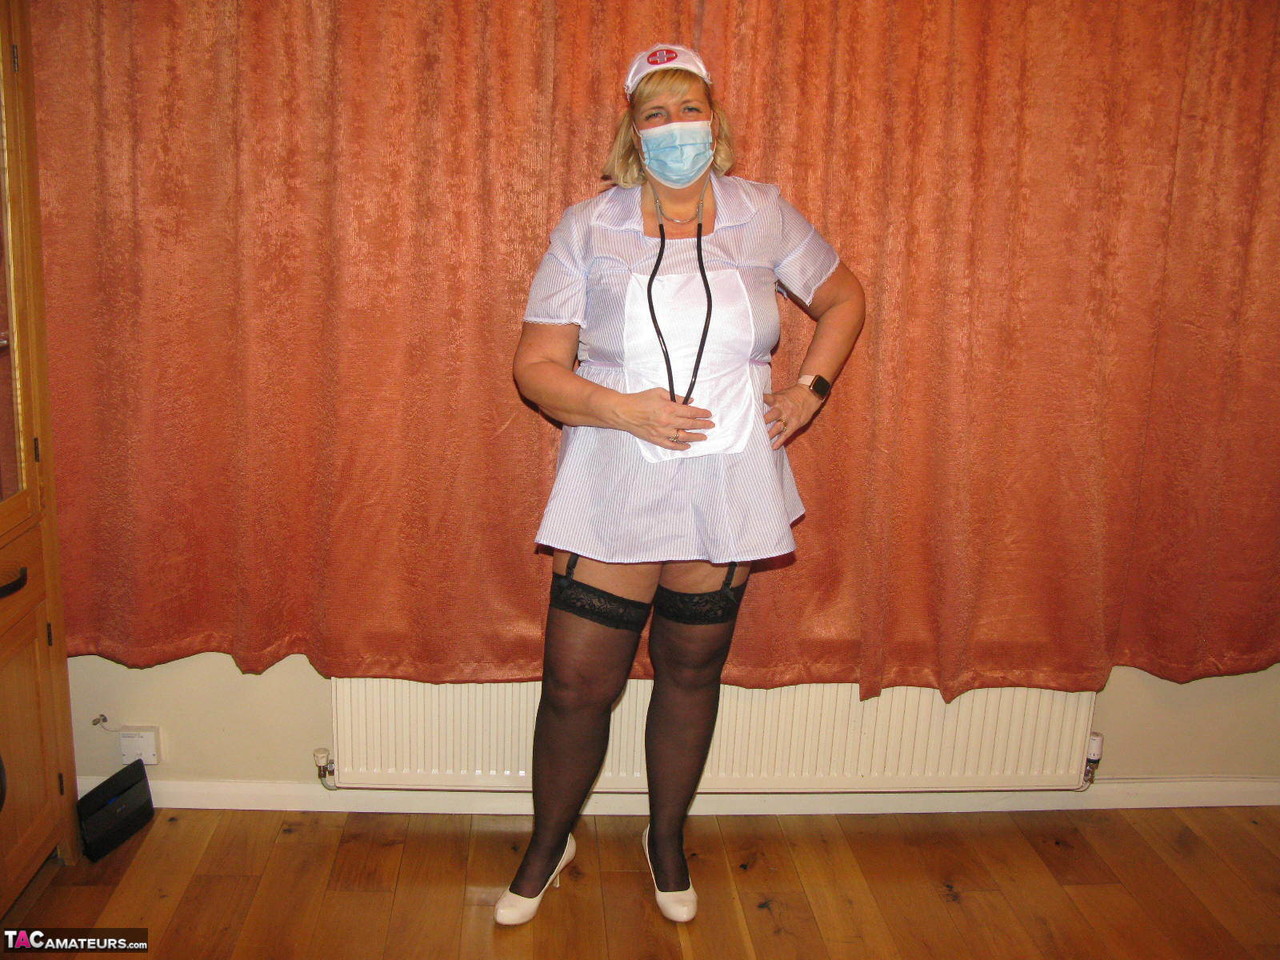 Fat nurse Chrissy Uk removes a surgical mask and uniform to model lingerie foto pornográfica #424682137 | TAC Amateurs Pics, Chrissy Uk, Mature, pornografia móvel